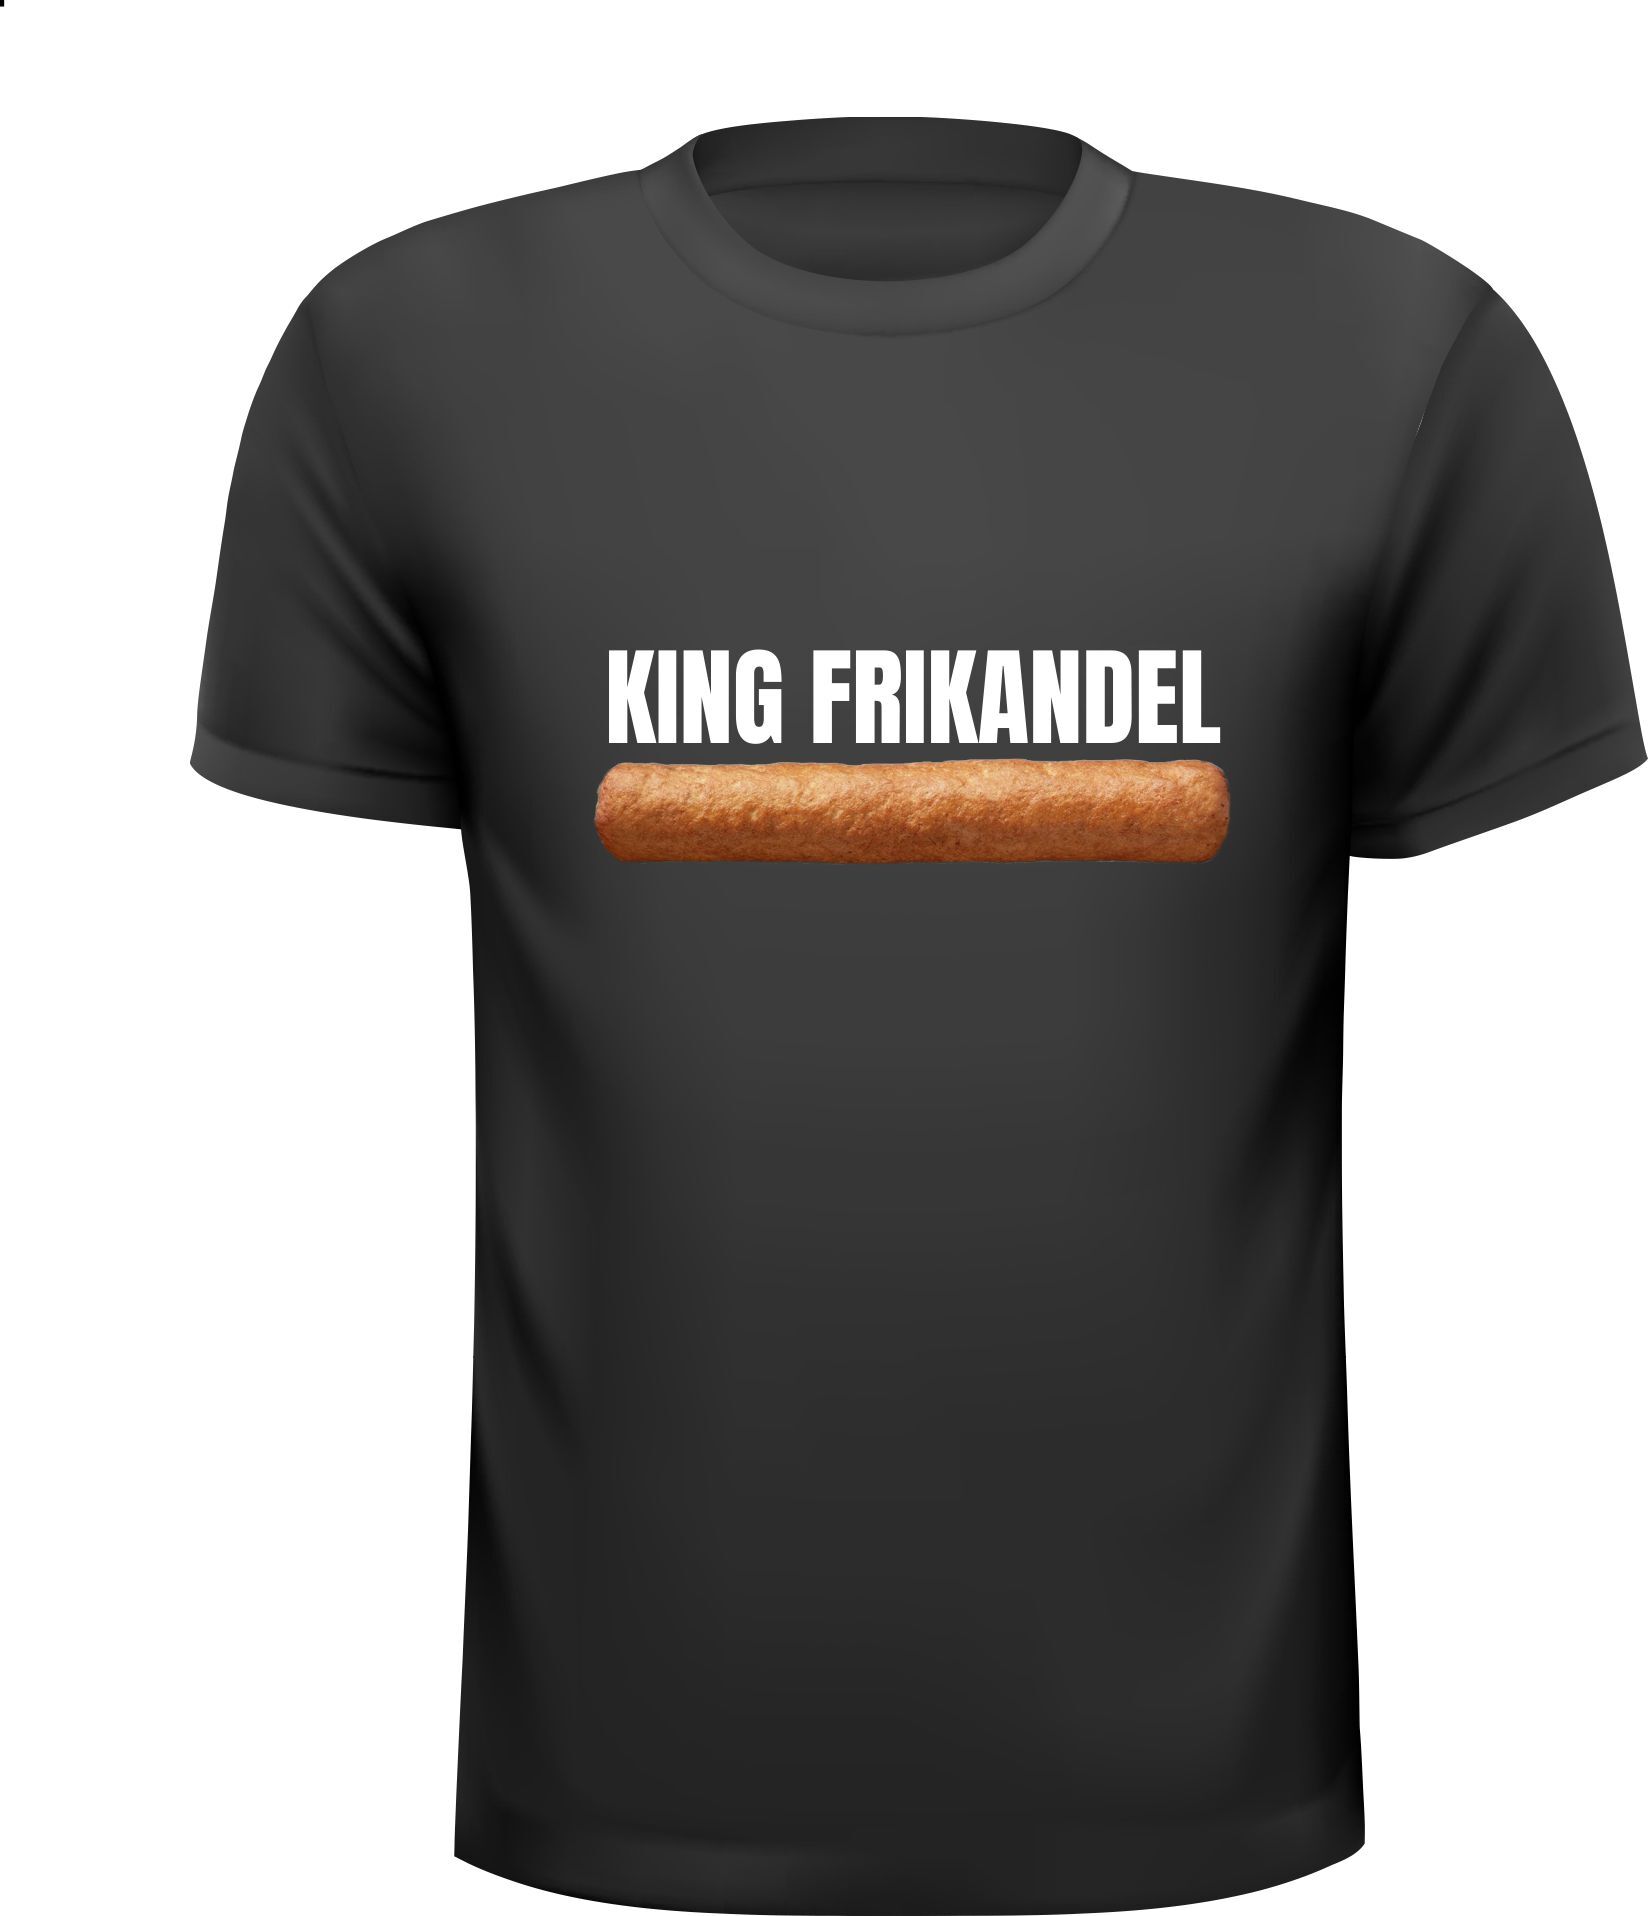 Shirtje voor King frikandel